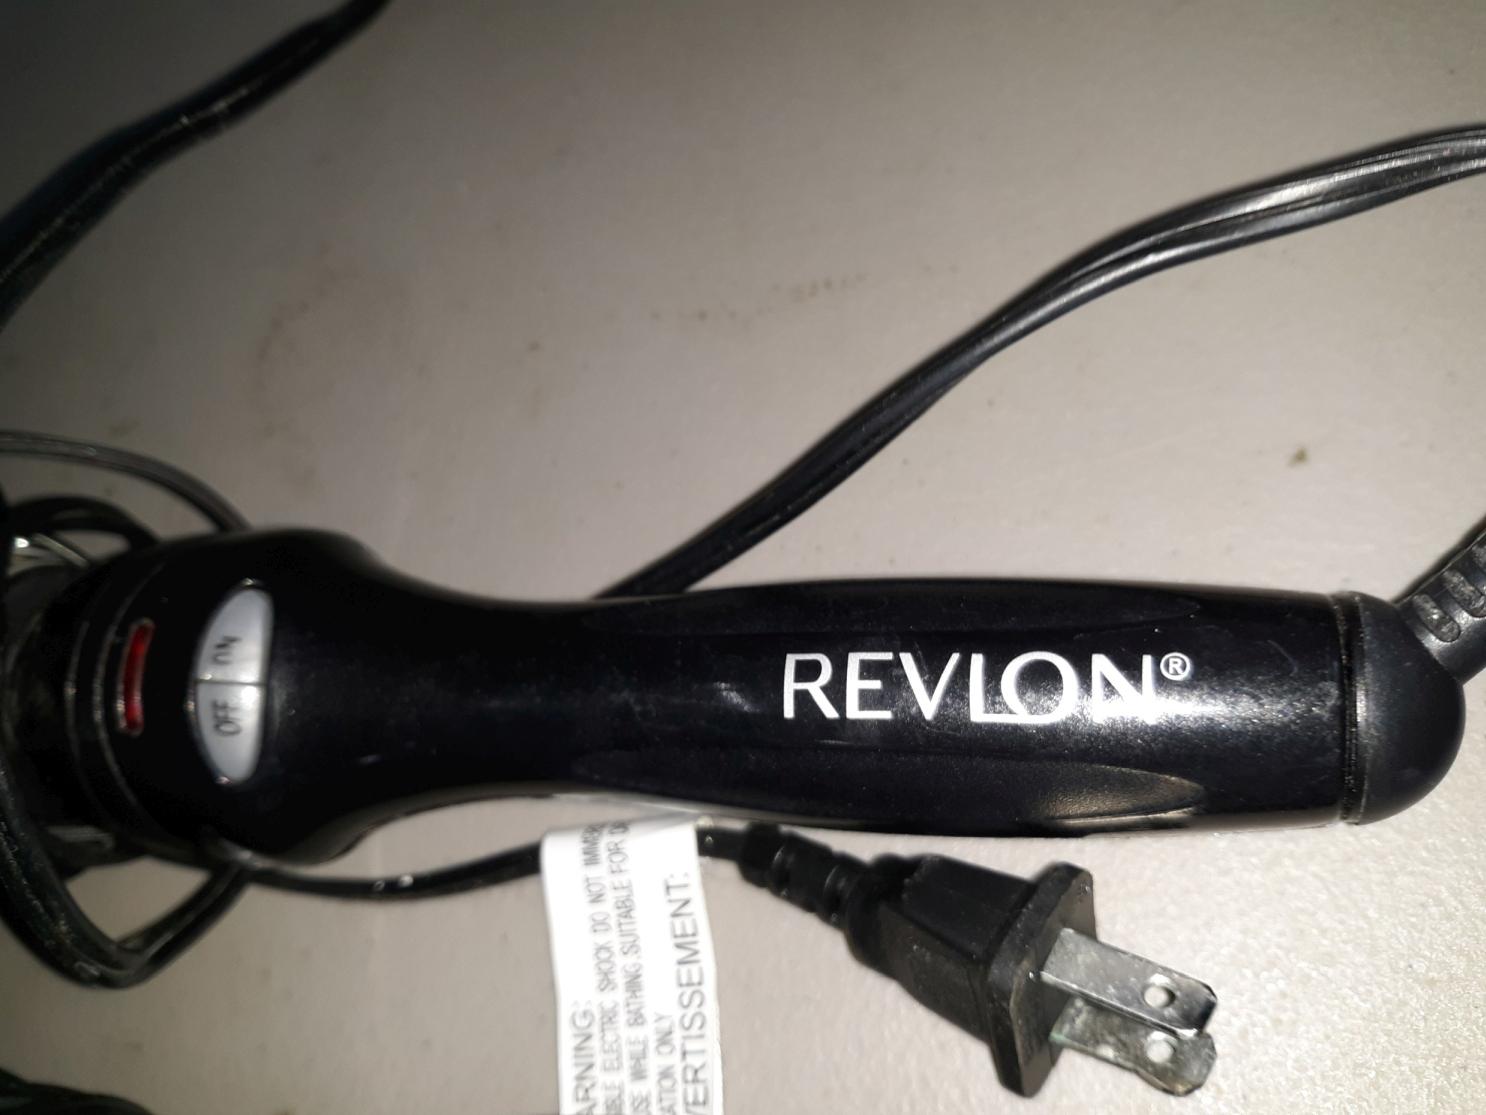 Remington Wand, Revlon Curling Iron, Conair Straightener